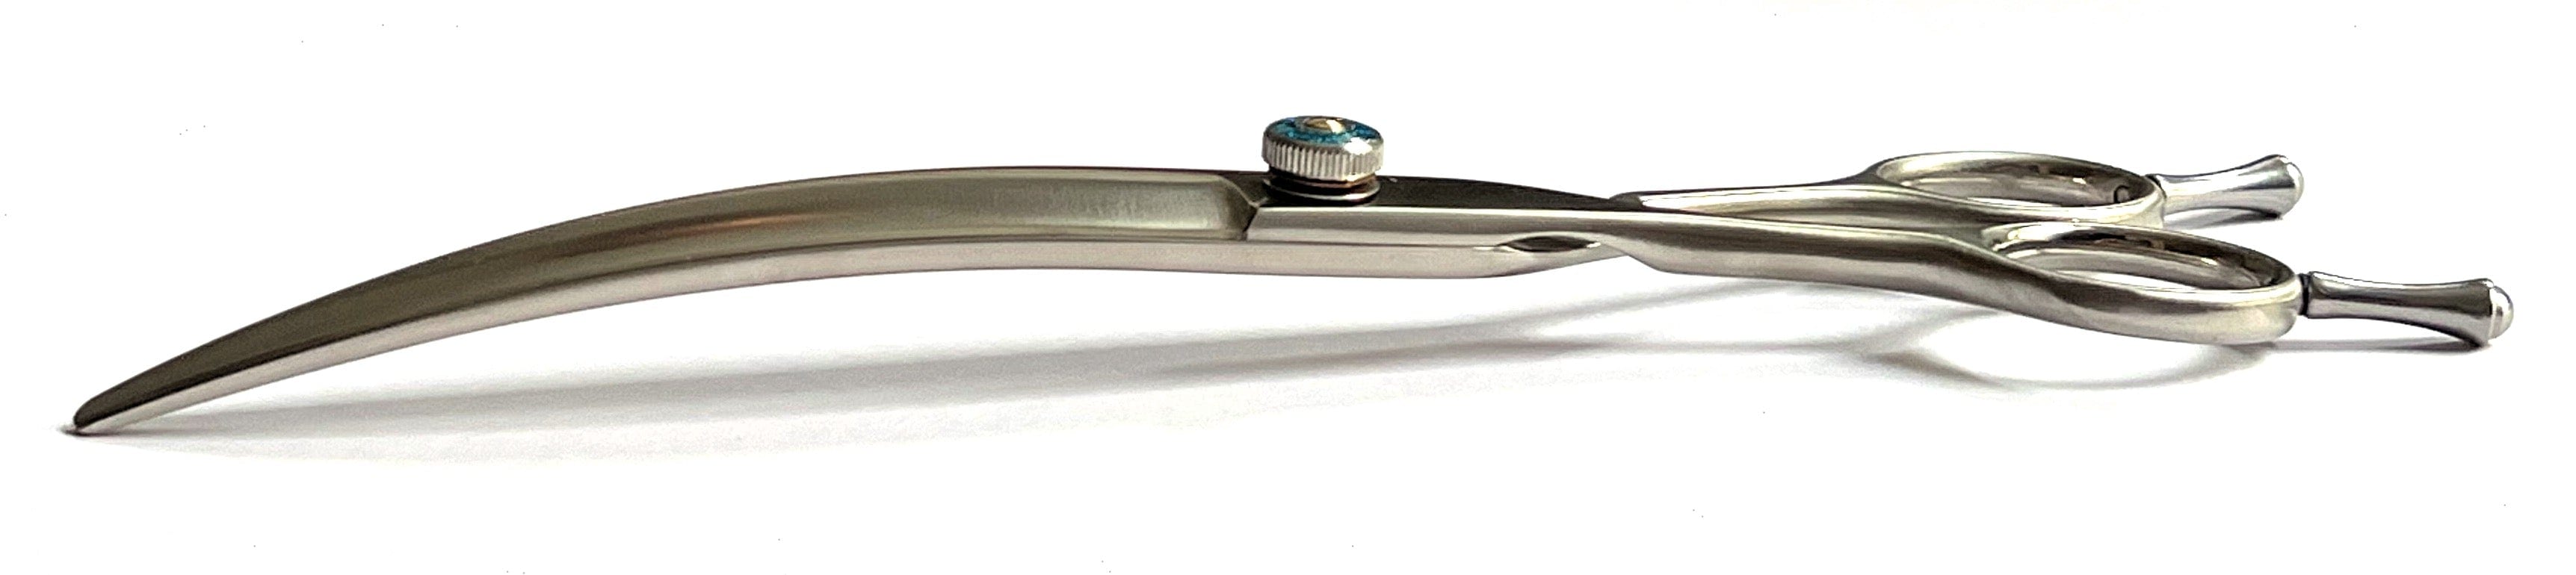 Abbfabb Grooming Scissors Ltd 7" Left Handed Reversible Curved Dog Grooming Scissor. 7" Fliappble curved dog grooming scissor